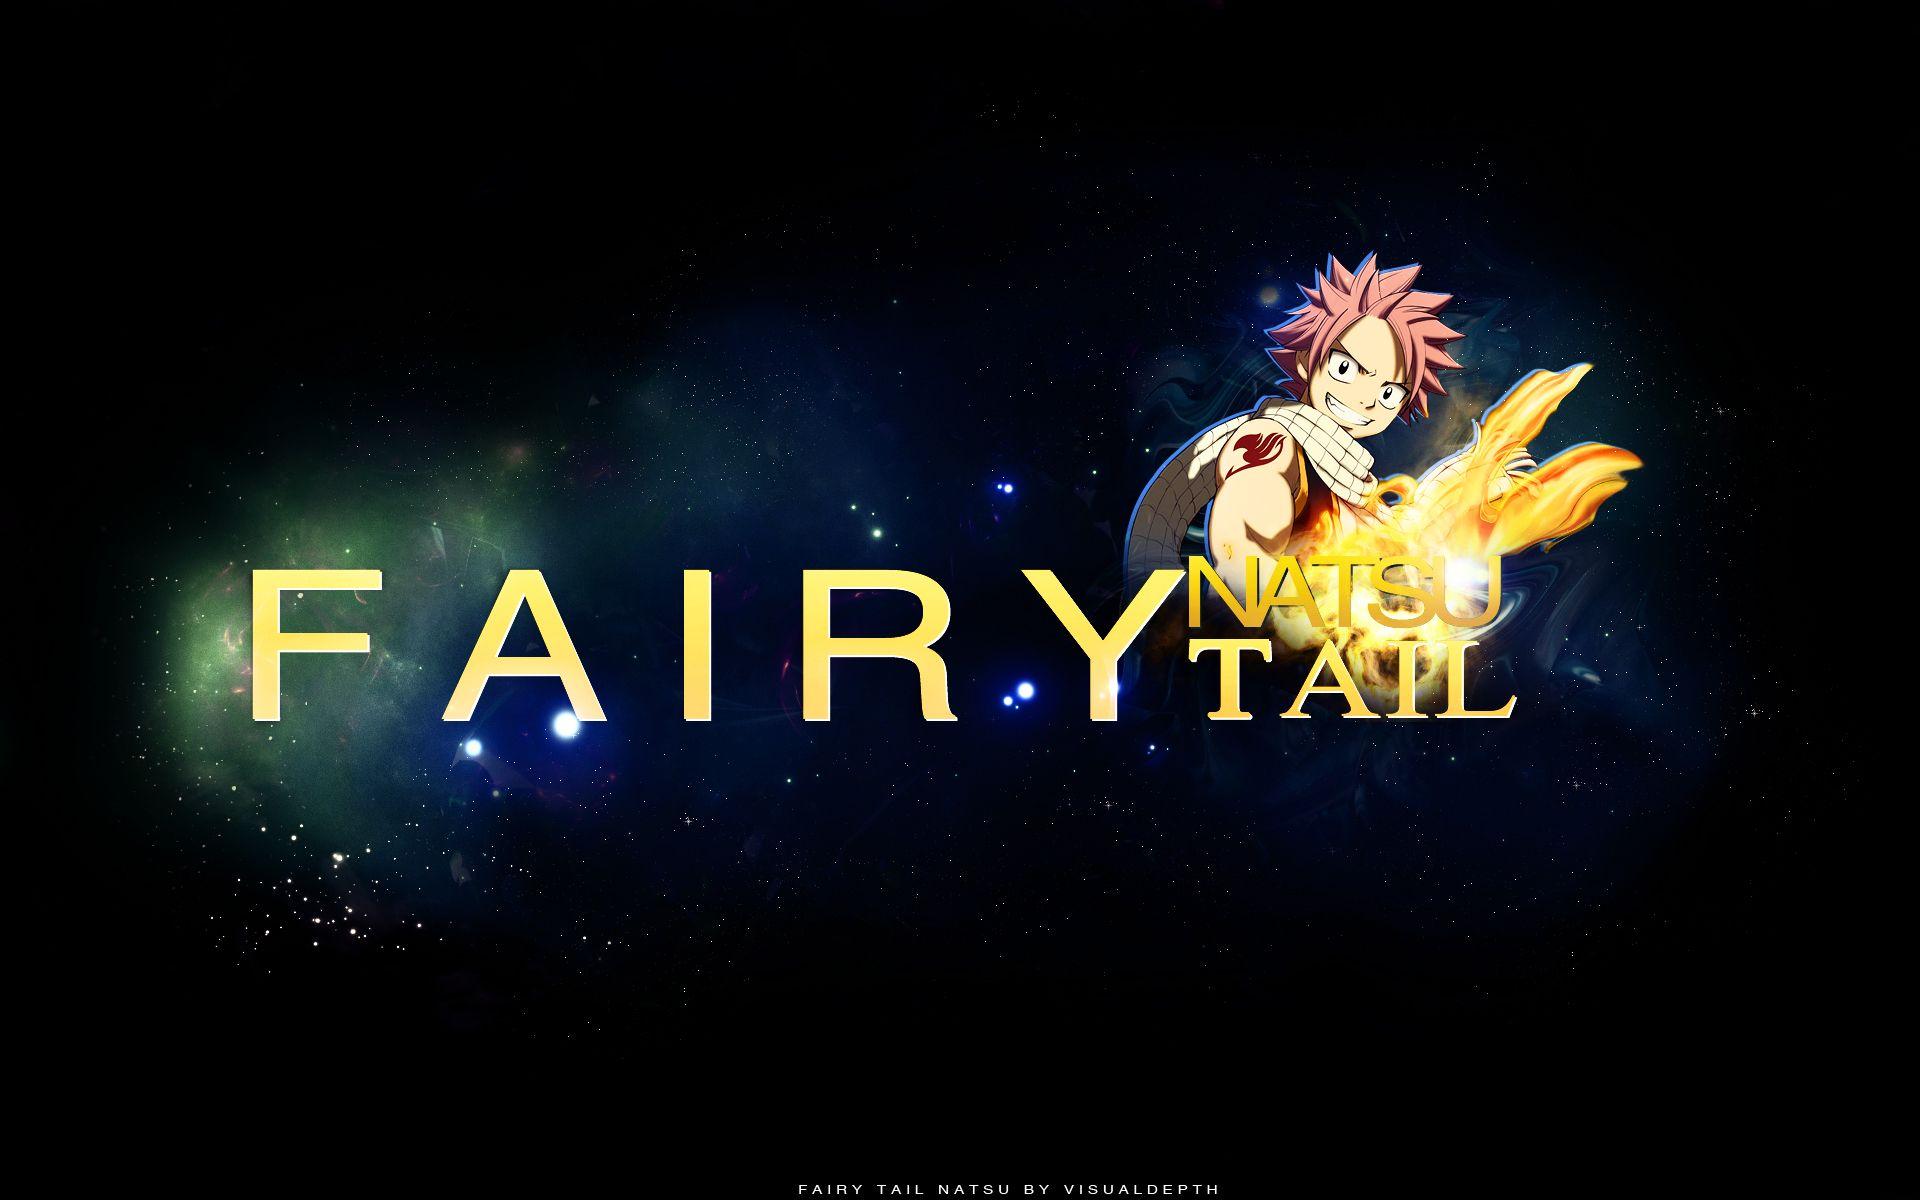 Fairy tail manga wallpaper desktop